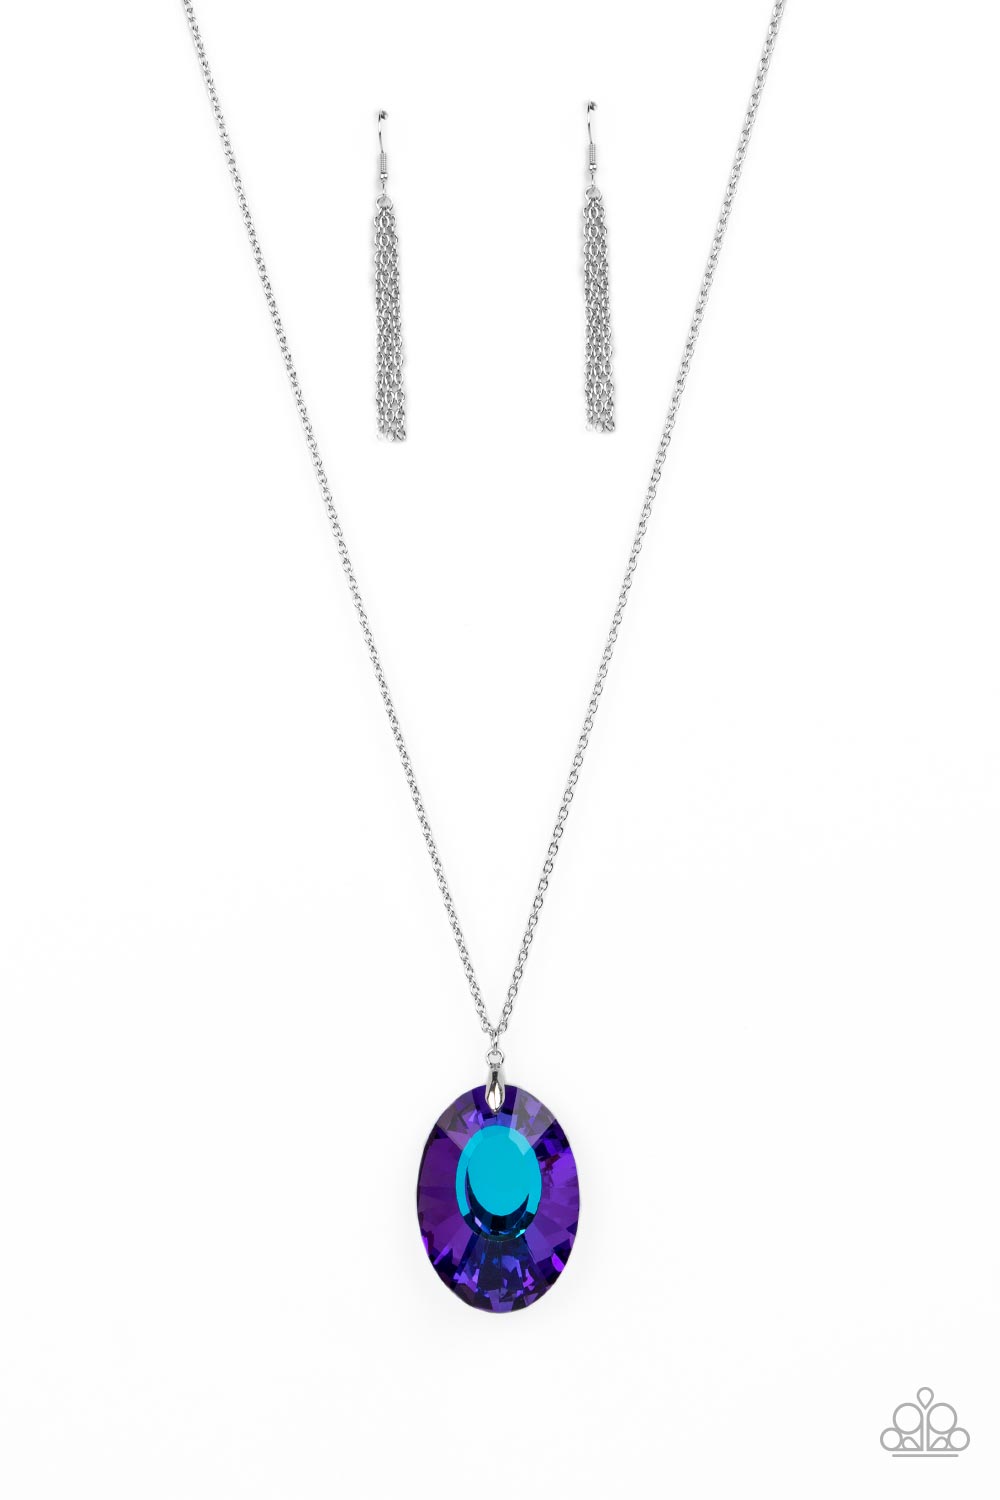 Celestial Essence - Blue Necklace  - Paparazzi Accessories - Alies Bling Bar